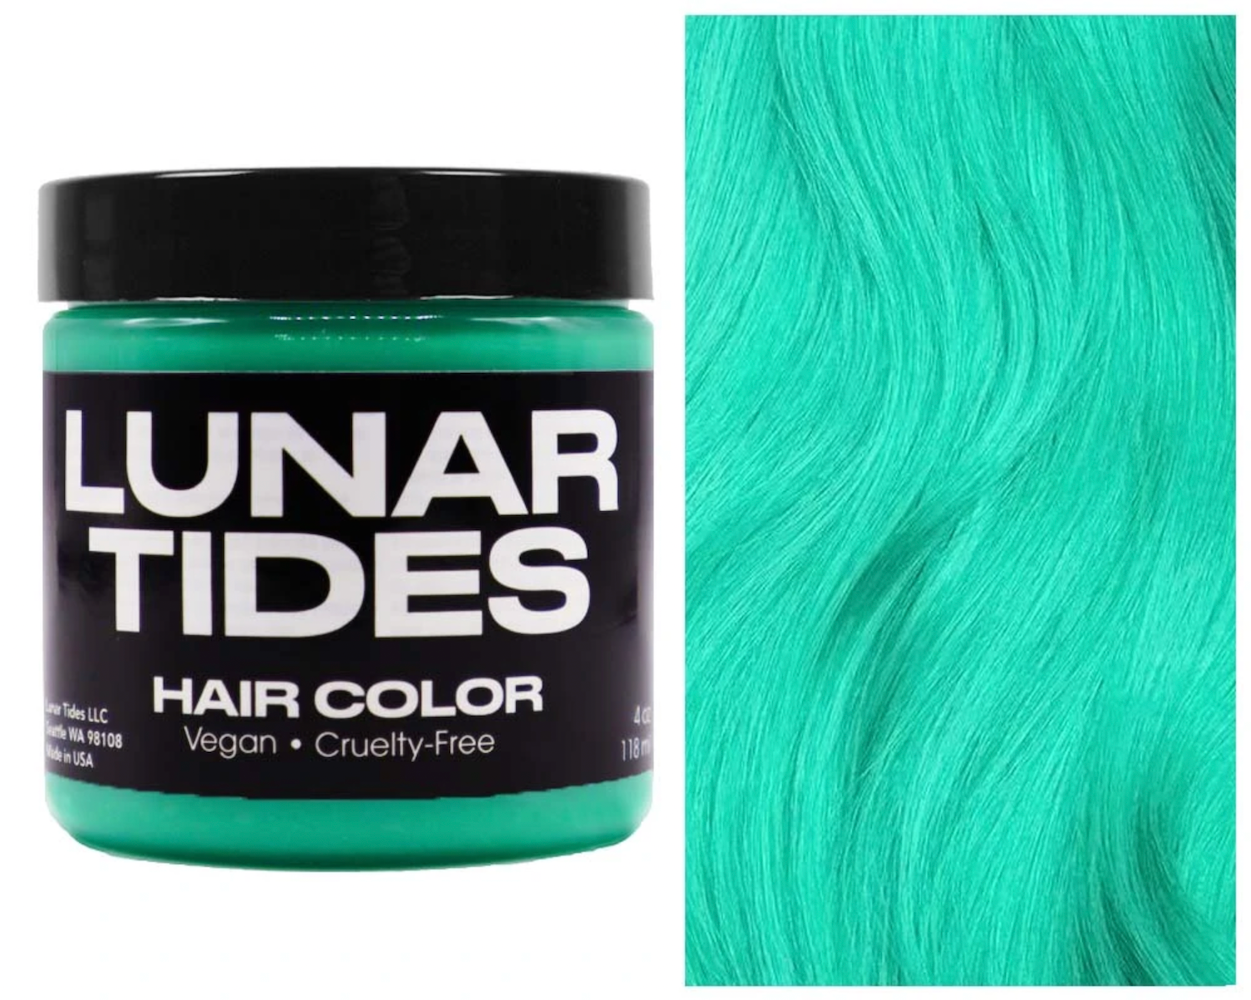 Lunar Tides Hair Dye - Beetle Green